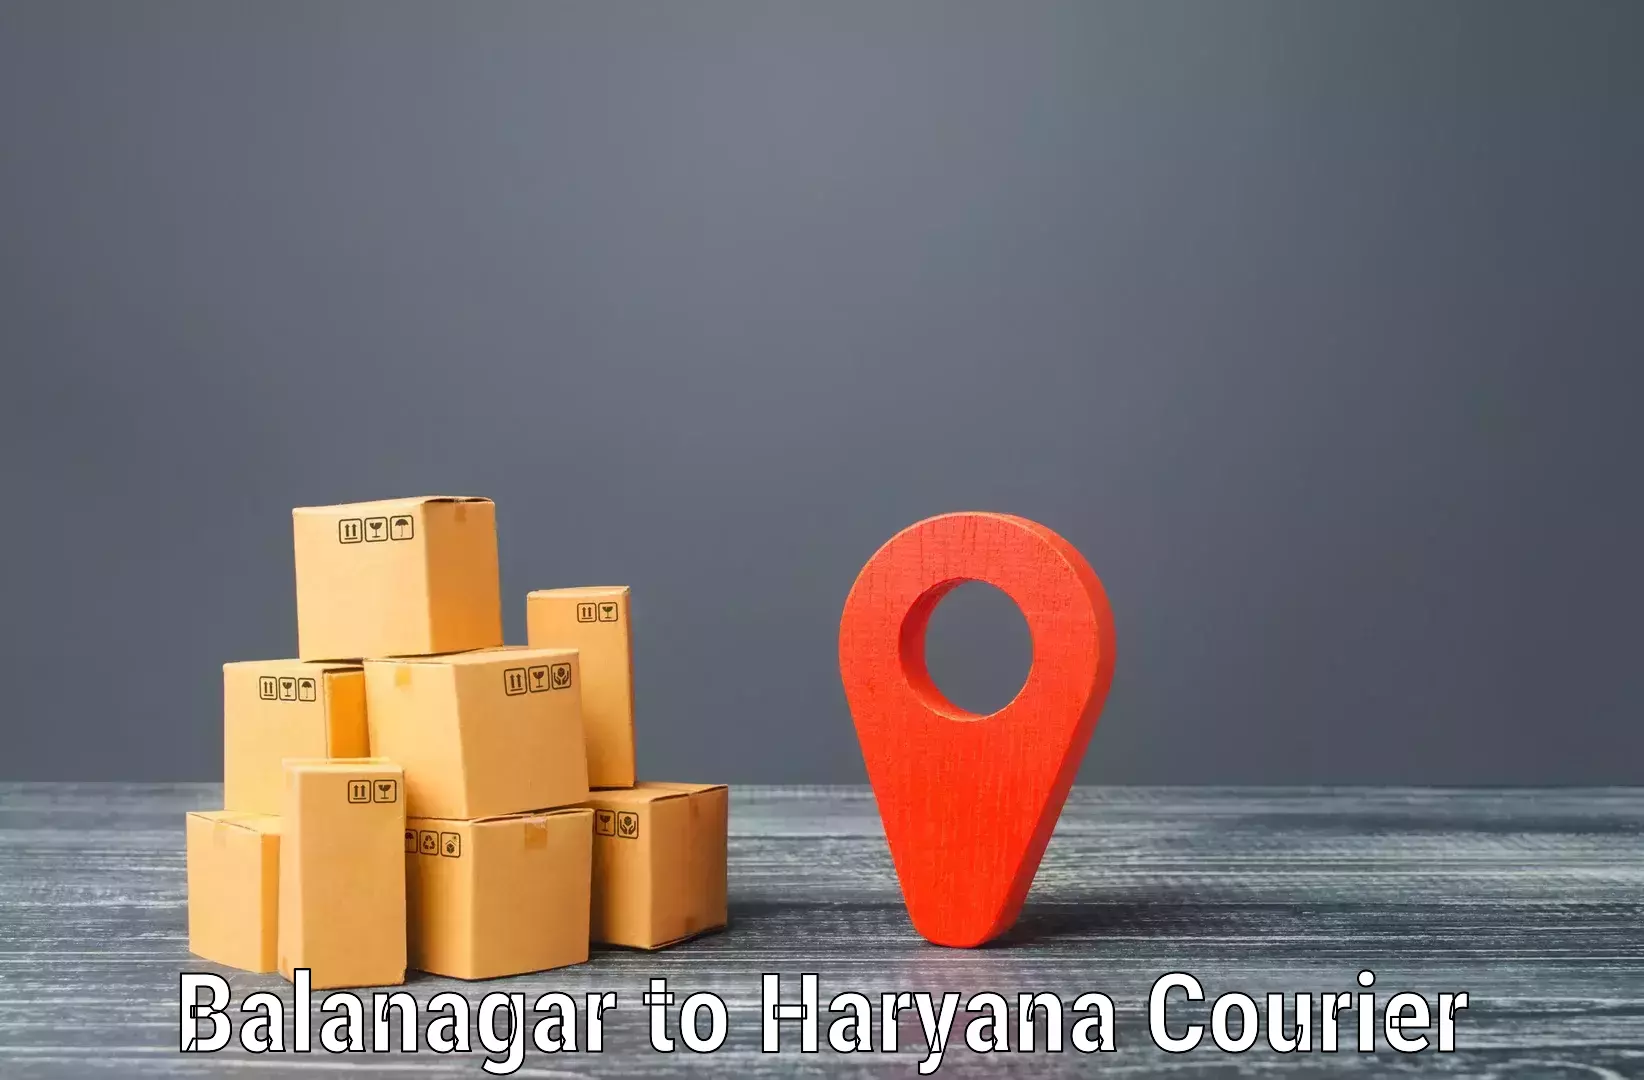 Professional parcel services Balanagar to Sonipat